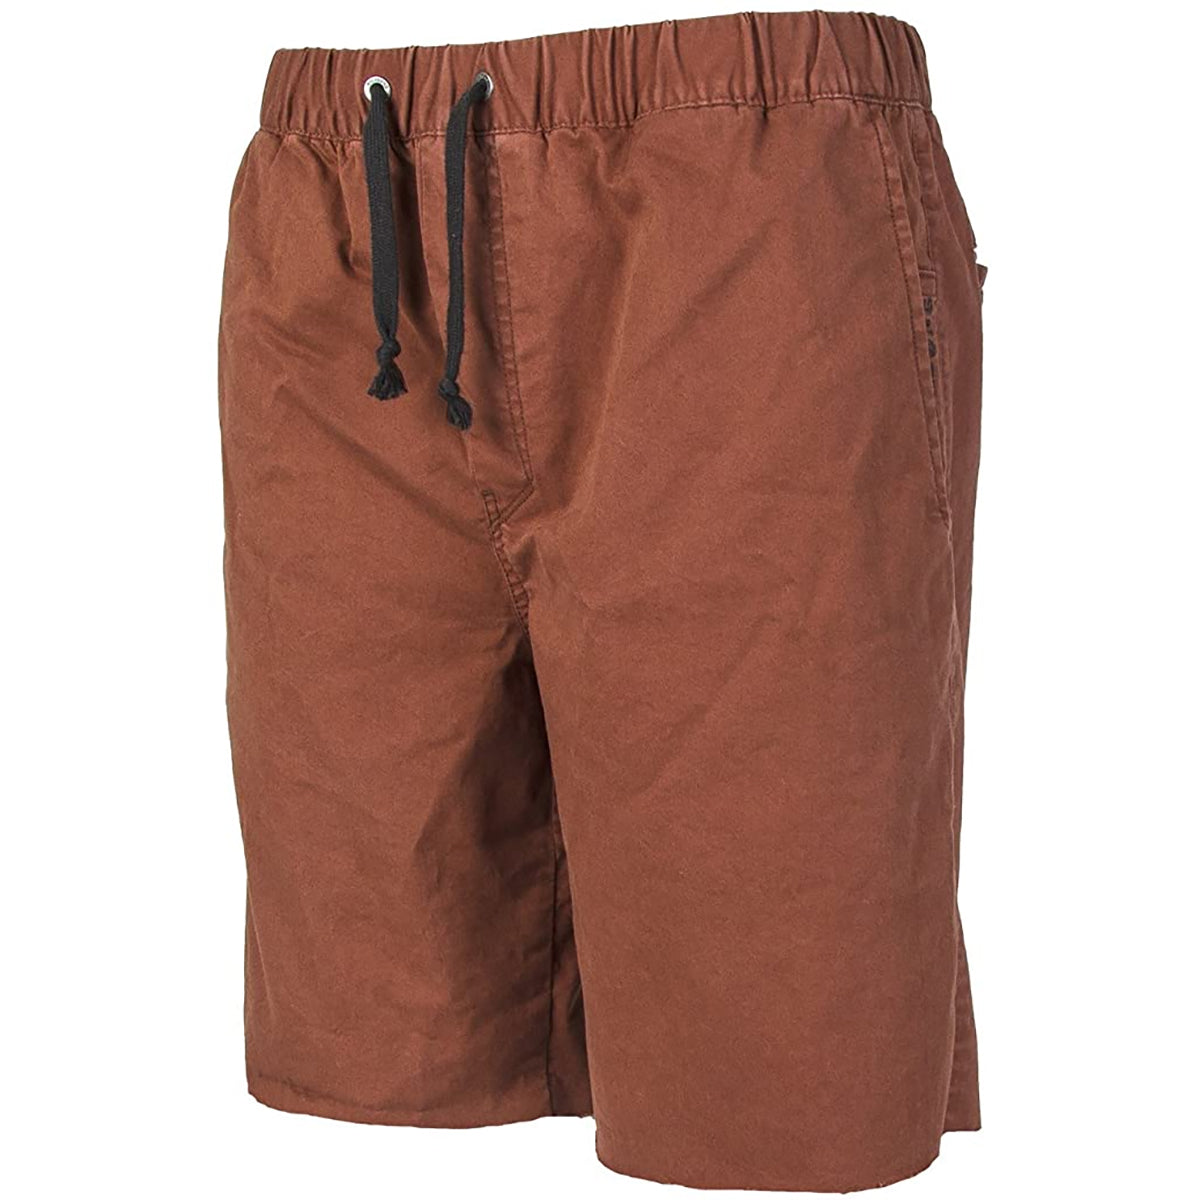 Billabong Outsider Elastic Men's Walkshort Shorts-M2127OUE